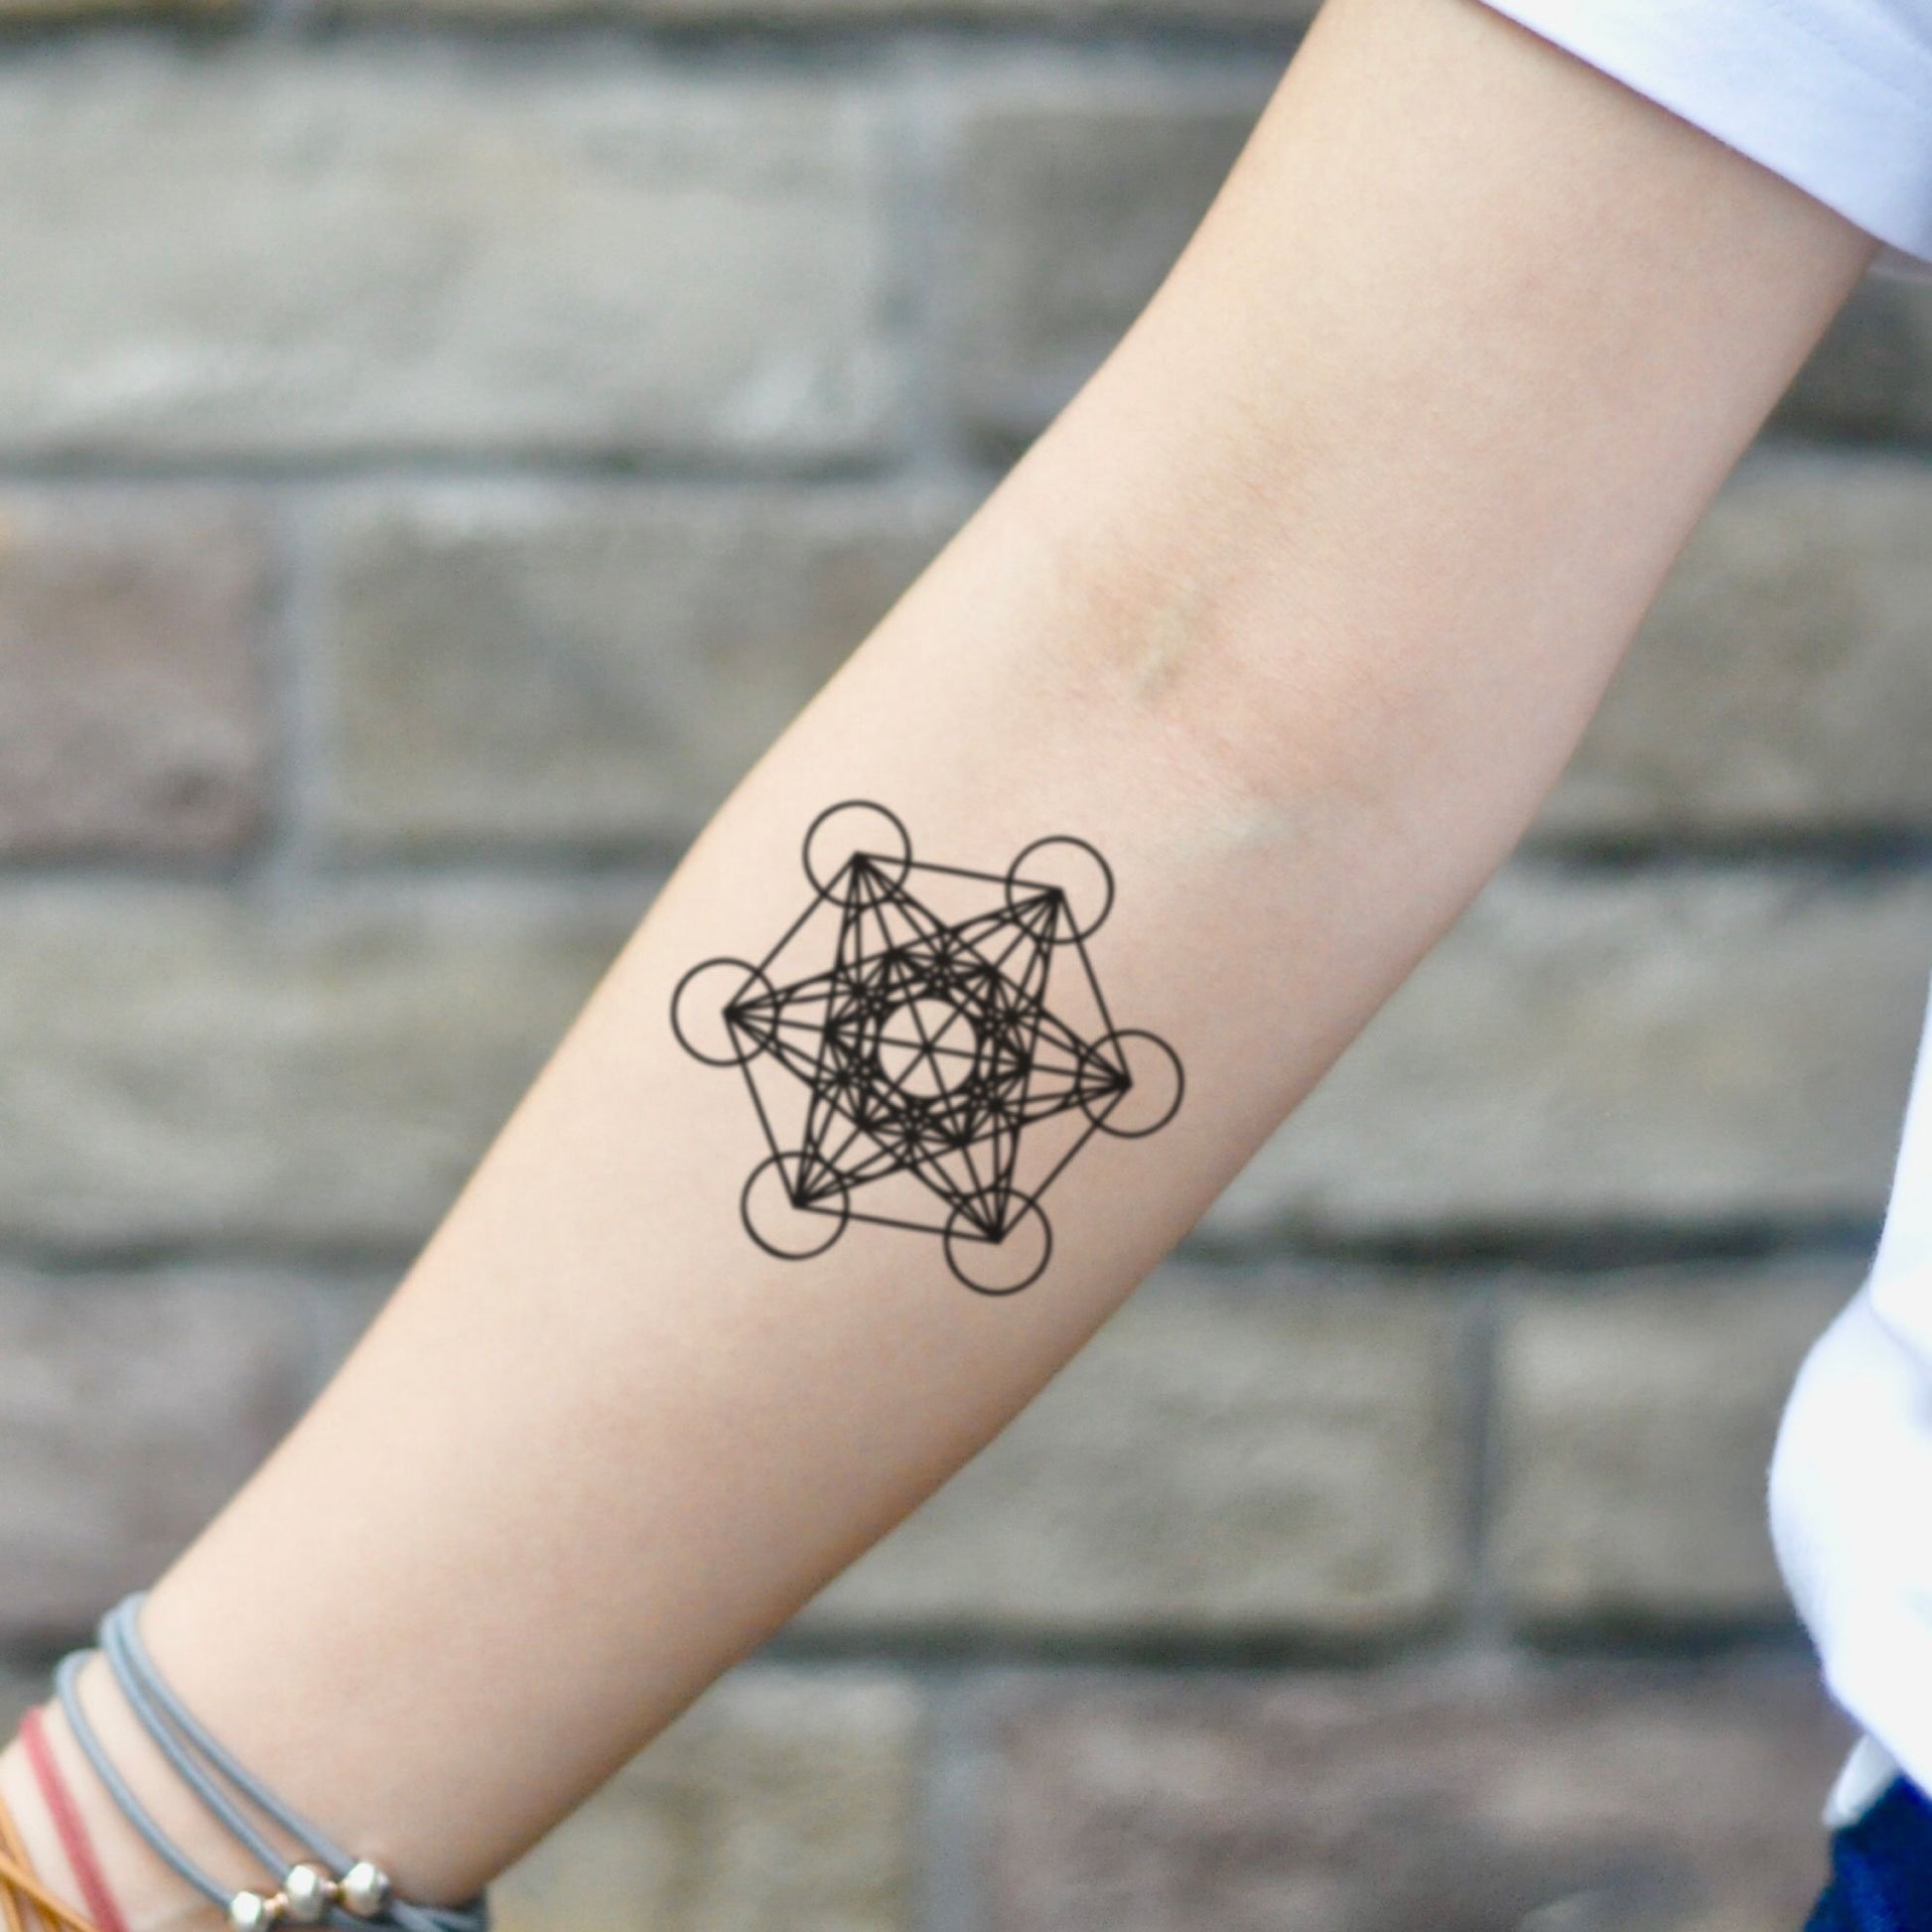 fake small metatron's cube millennial mystery mystic geometric temporary tattoo sticker design idea on inner arm